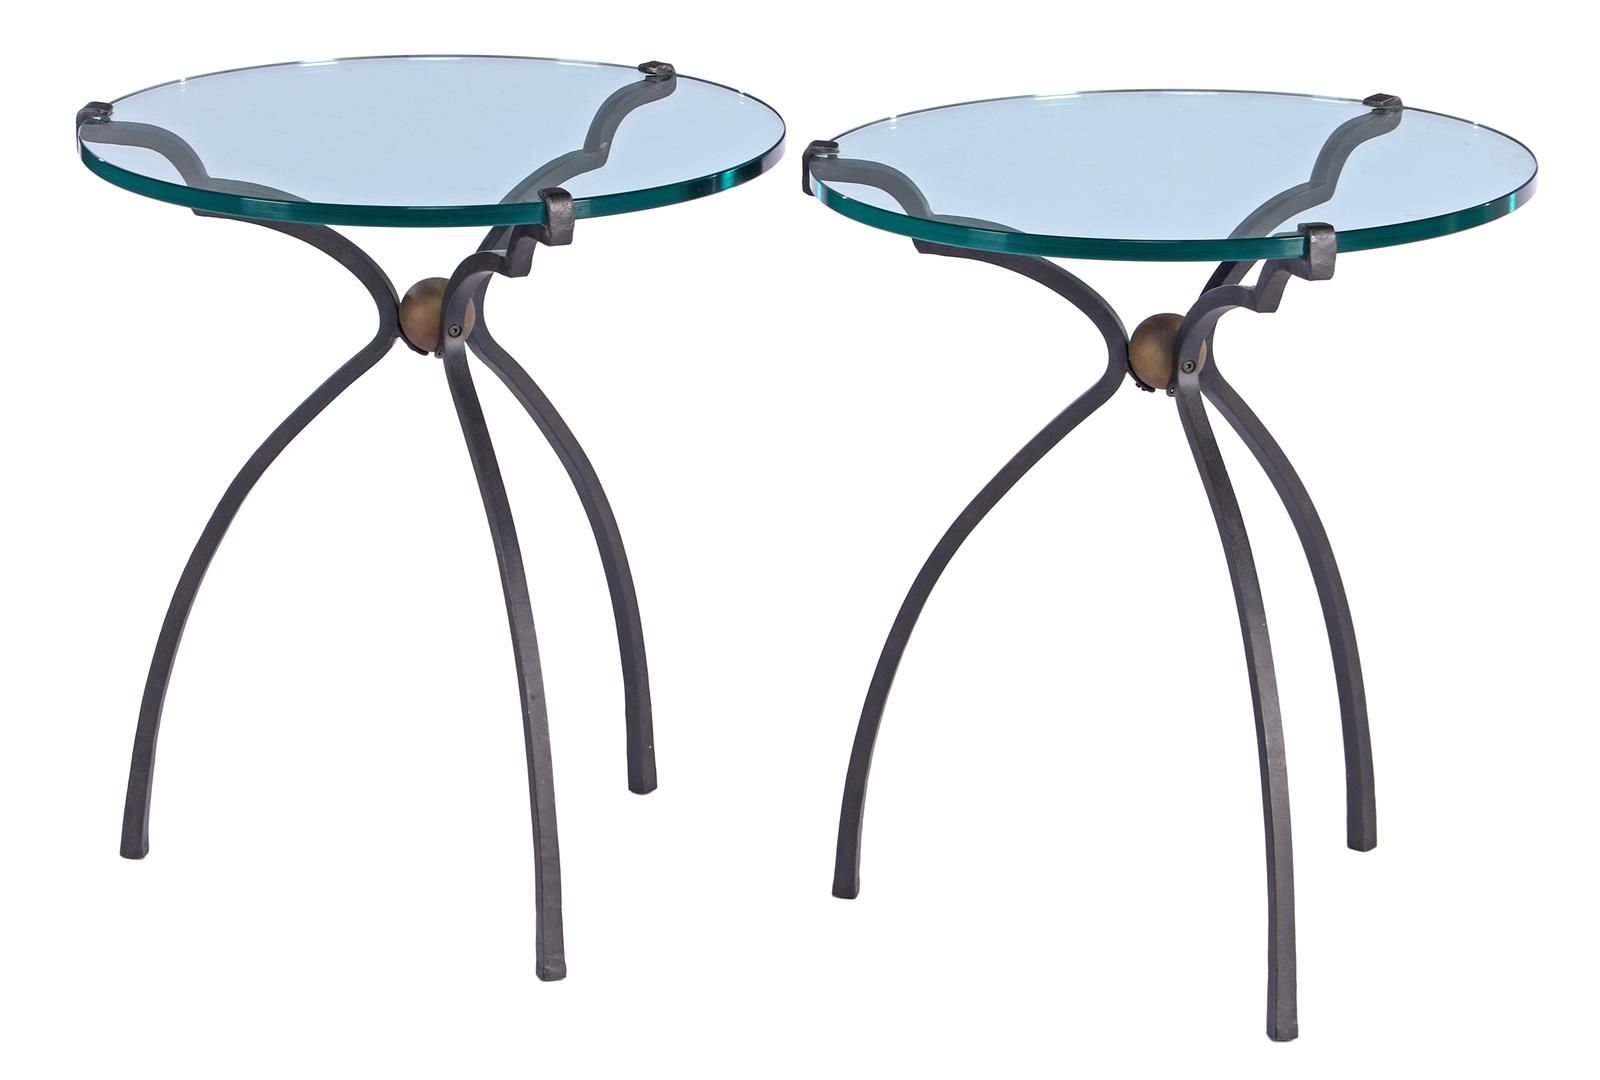 Peter Ghyczy 彼得-吉奇（1940 年）
两张发黑金属边桌，玻璃桌面，彼得-吉奇设计，高 56 厘米，桌面直径 30 厘米